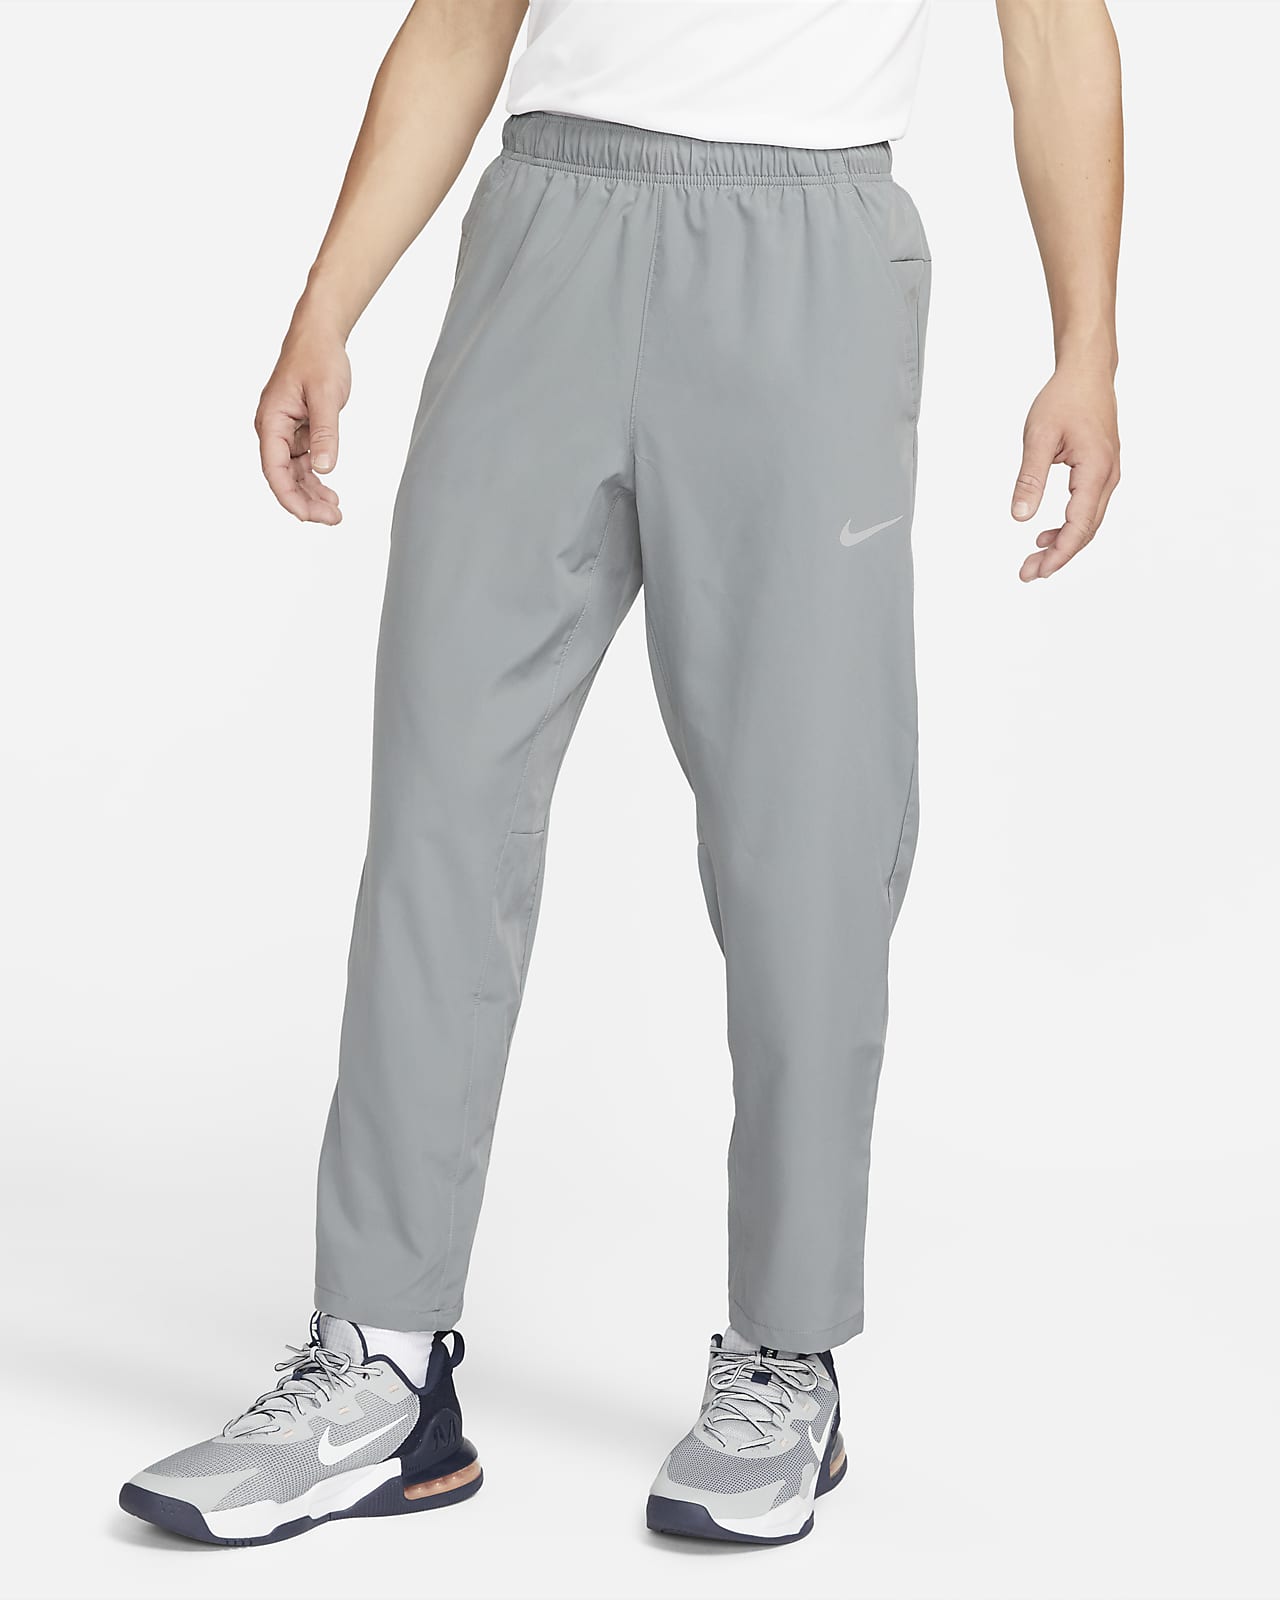 Nike Form Men's Dri-FIT Open-Hem Versatile Pants